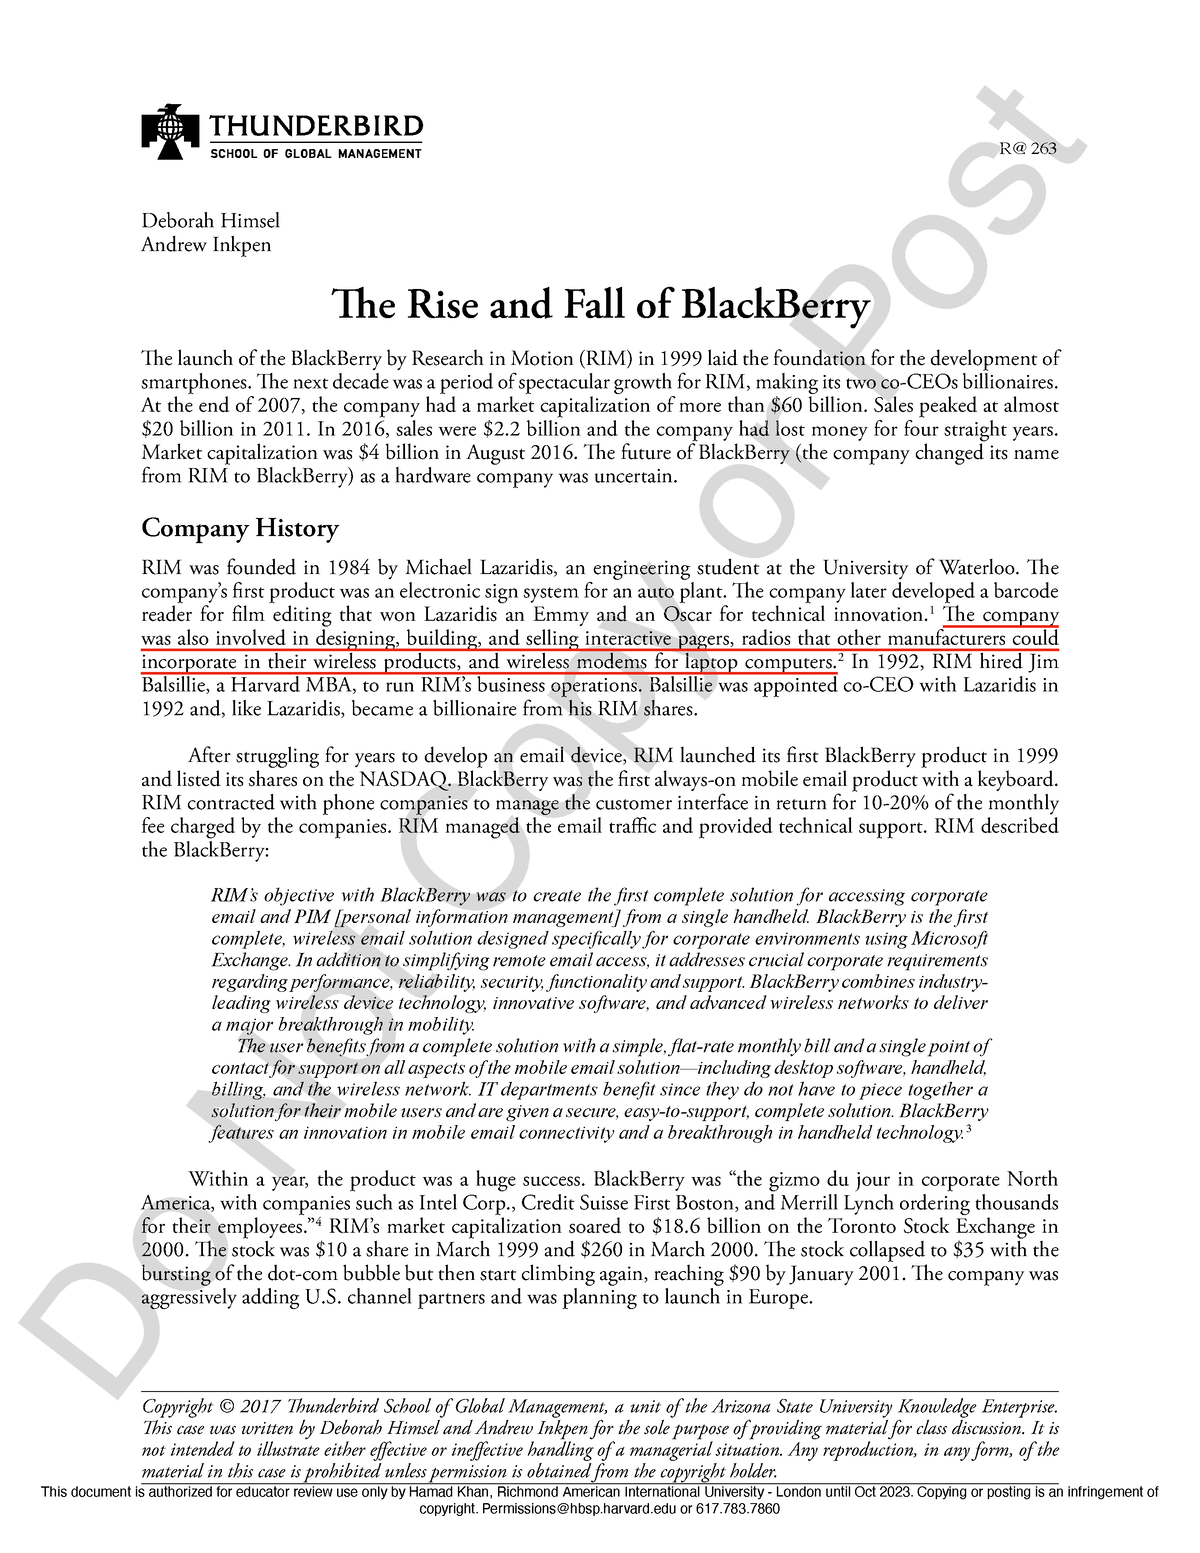 blackberry case study analysis